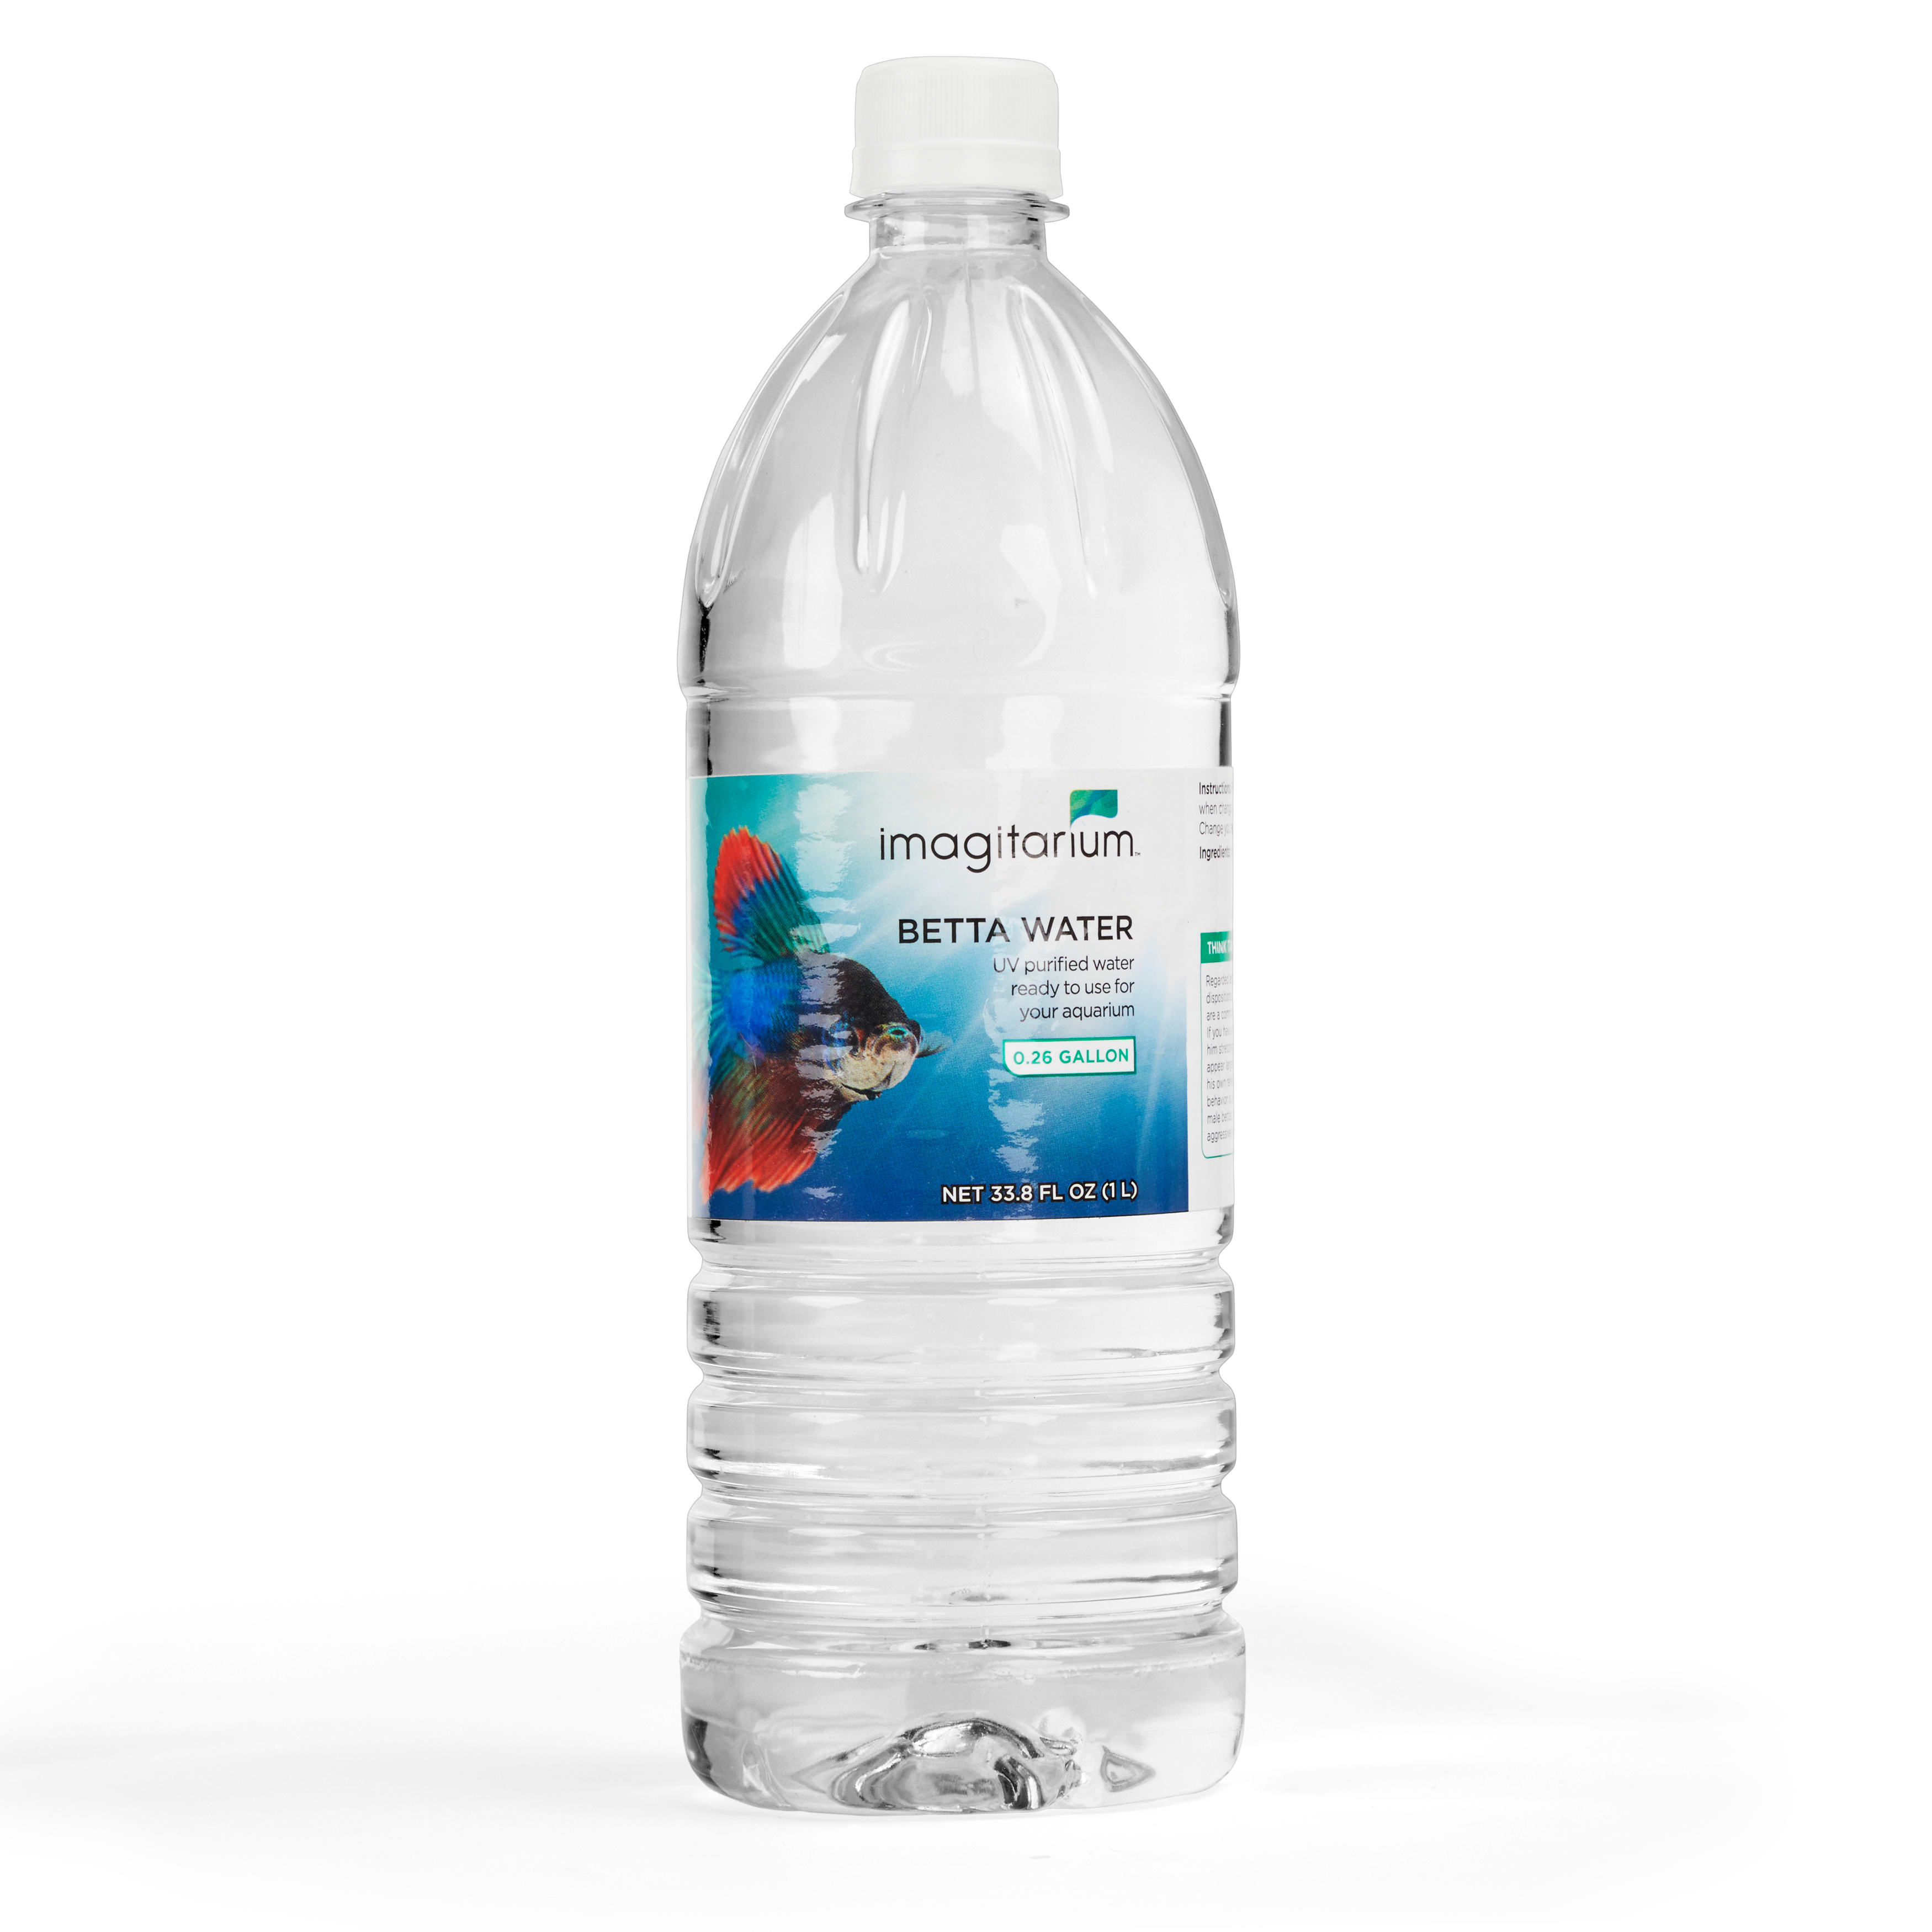 Imagitarium Betta Water, 0.26 Gallon 